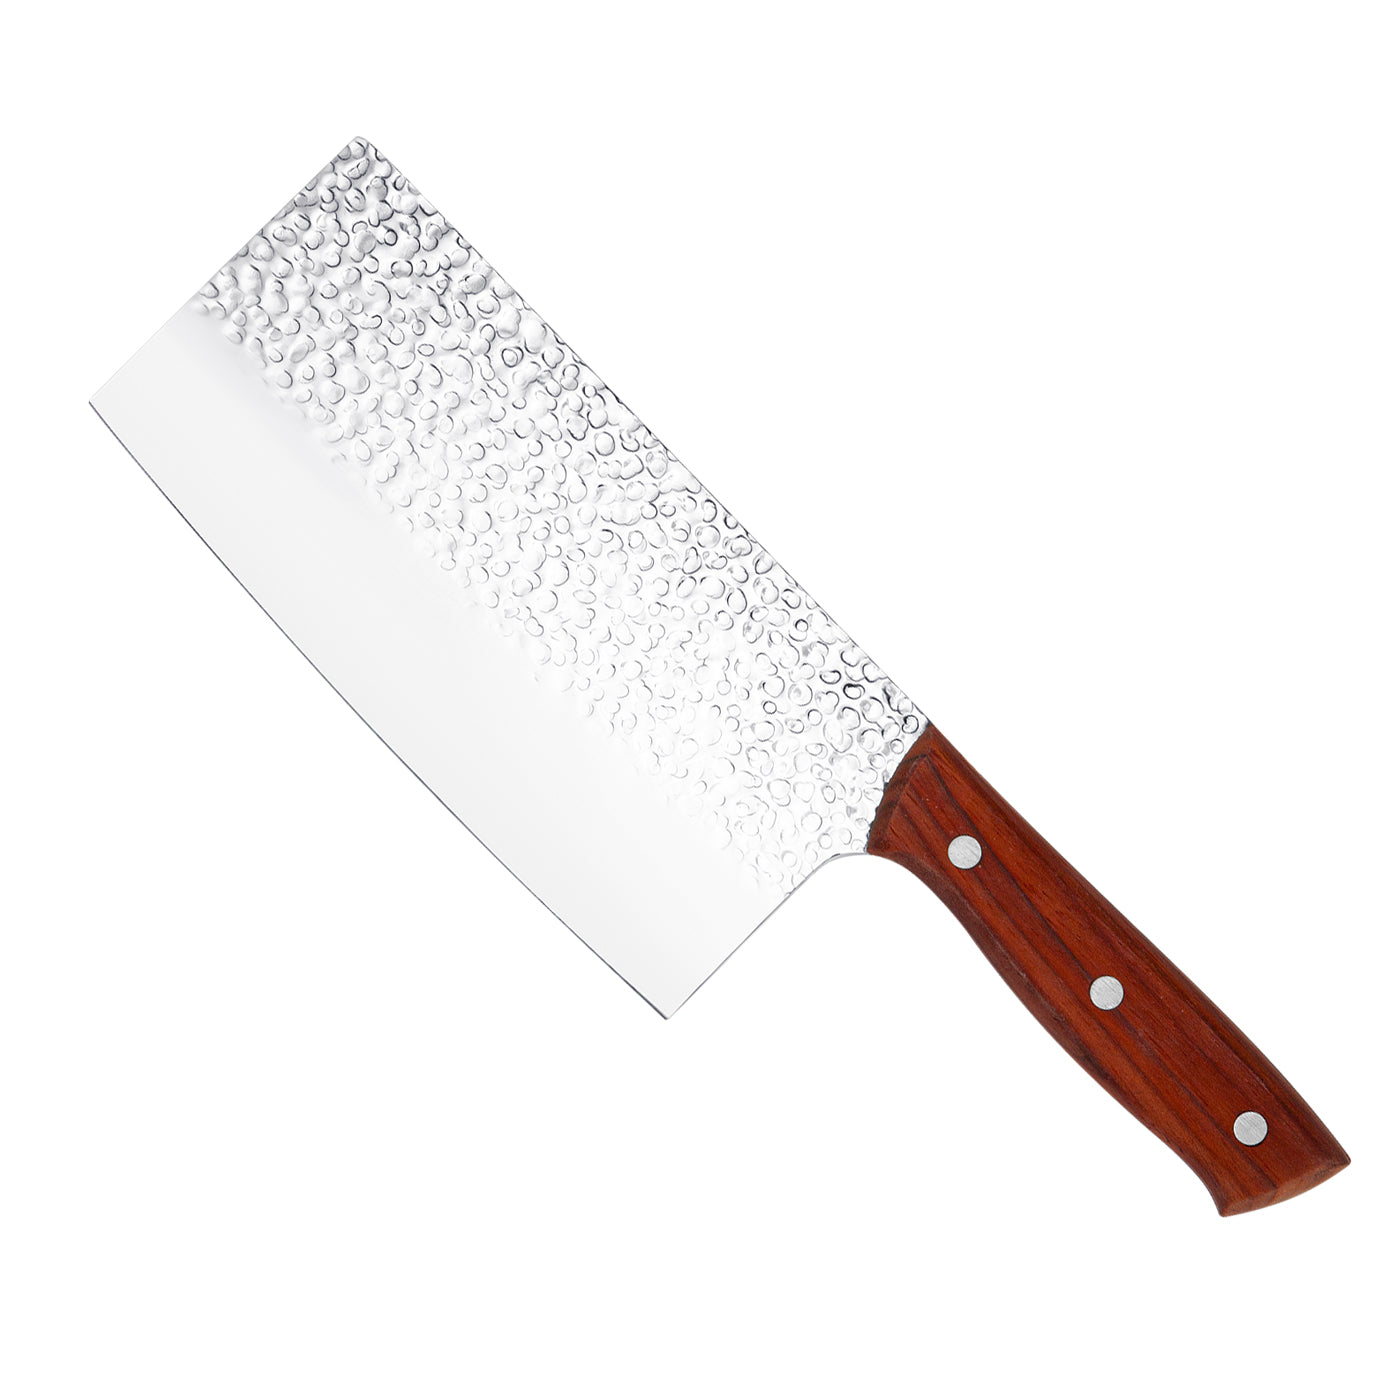 Cuchillos japoneses, cuchillo carnicero 57833 / 57840